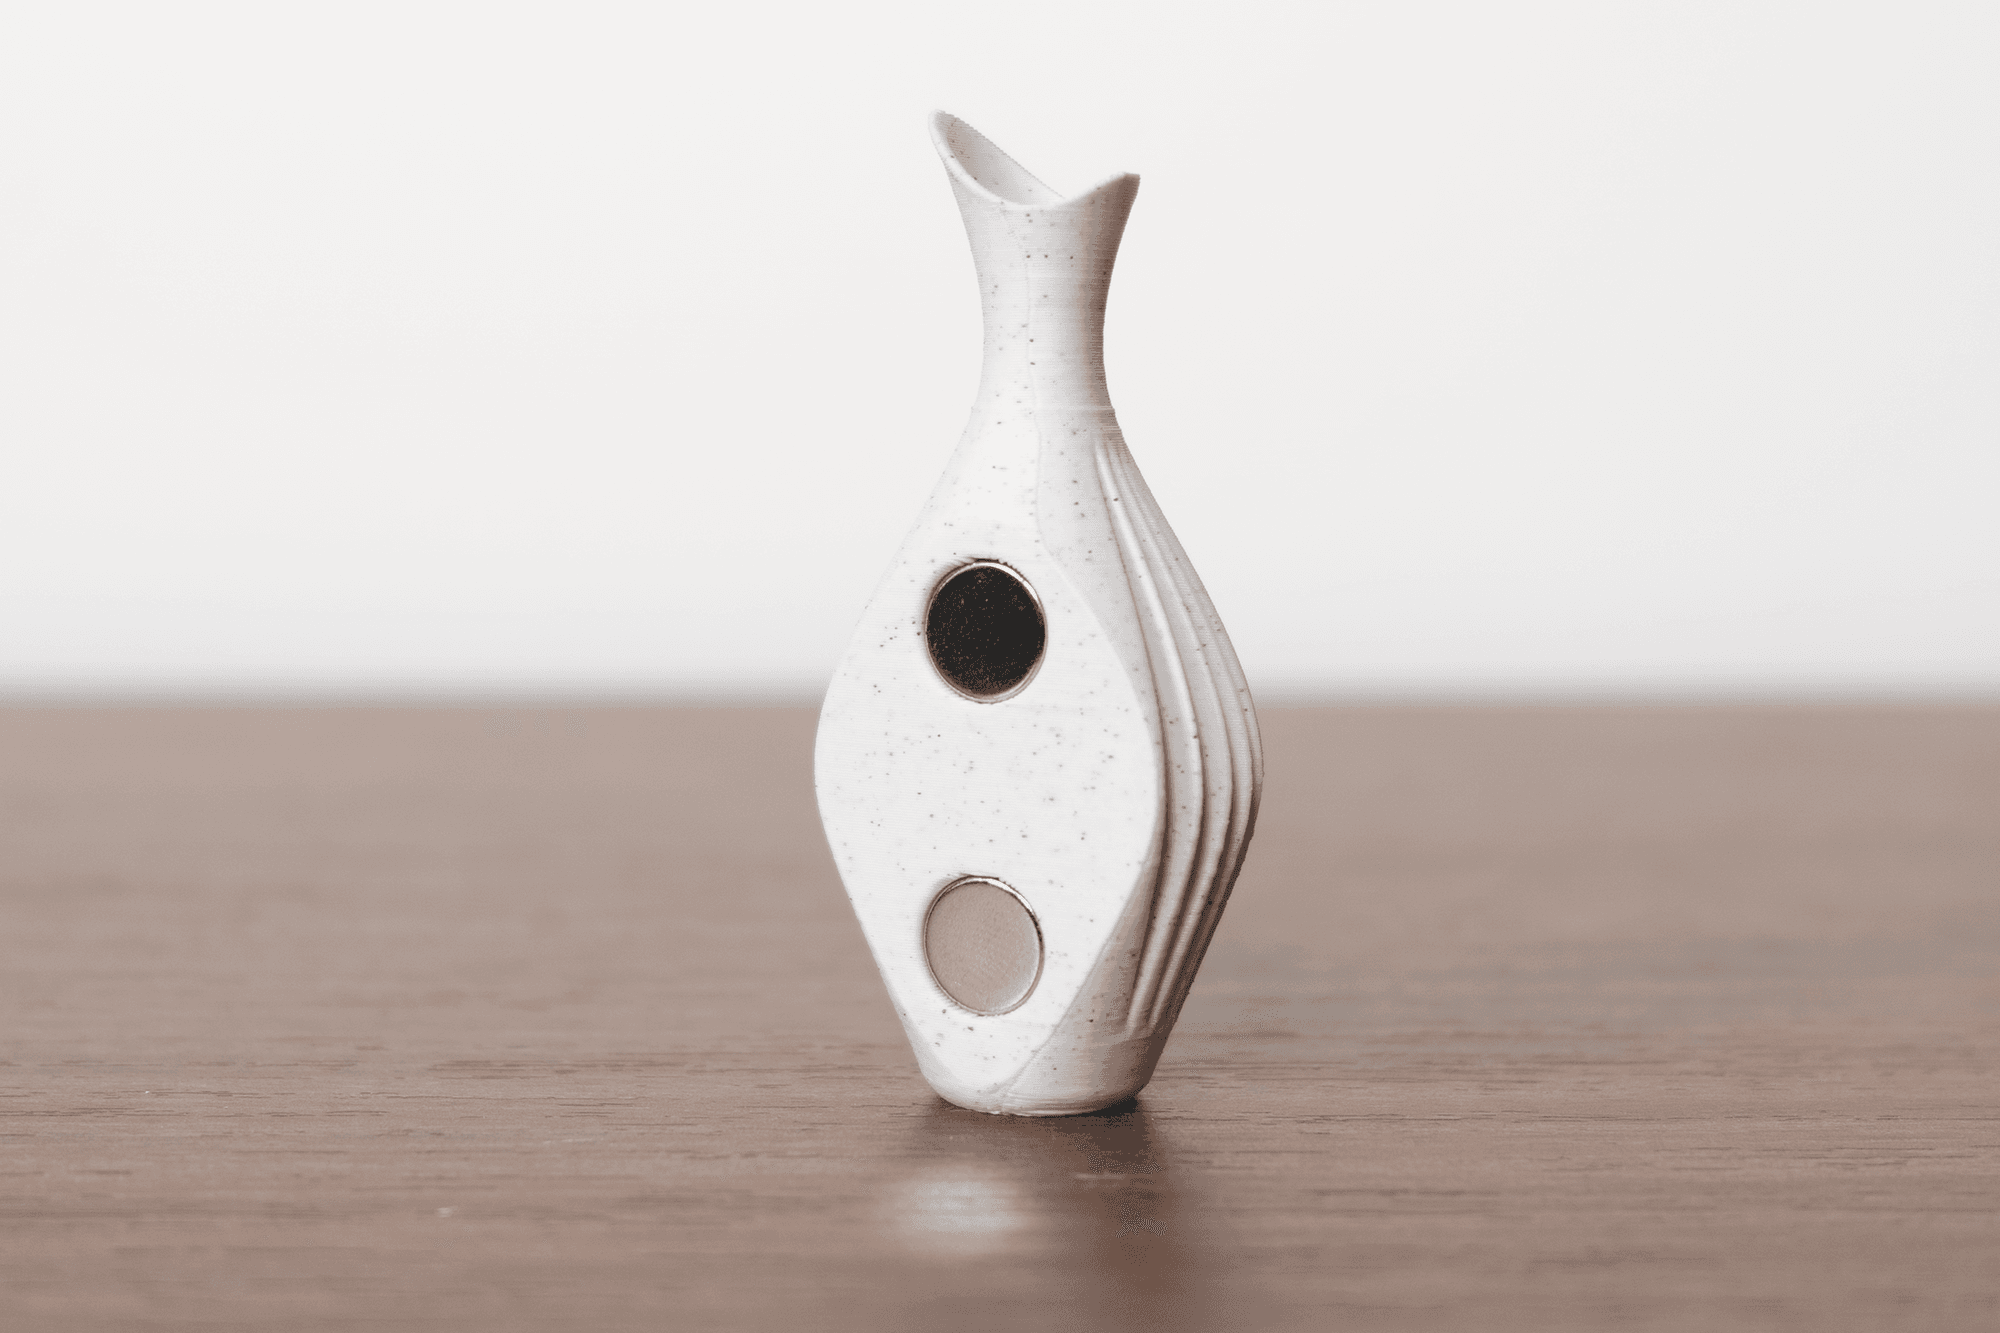 Mini Magnetic Vase No. 1 3d model